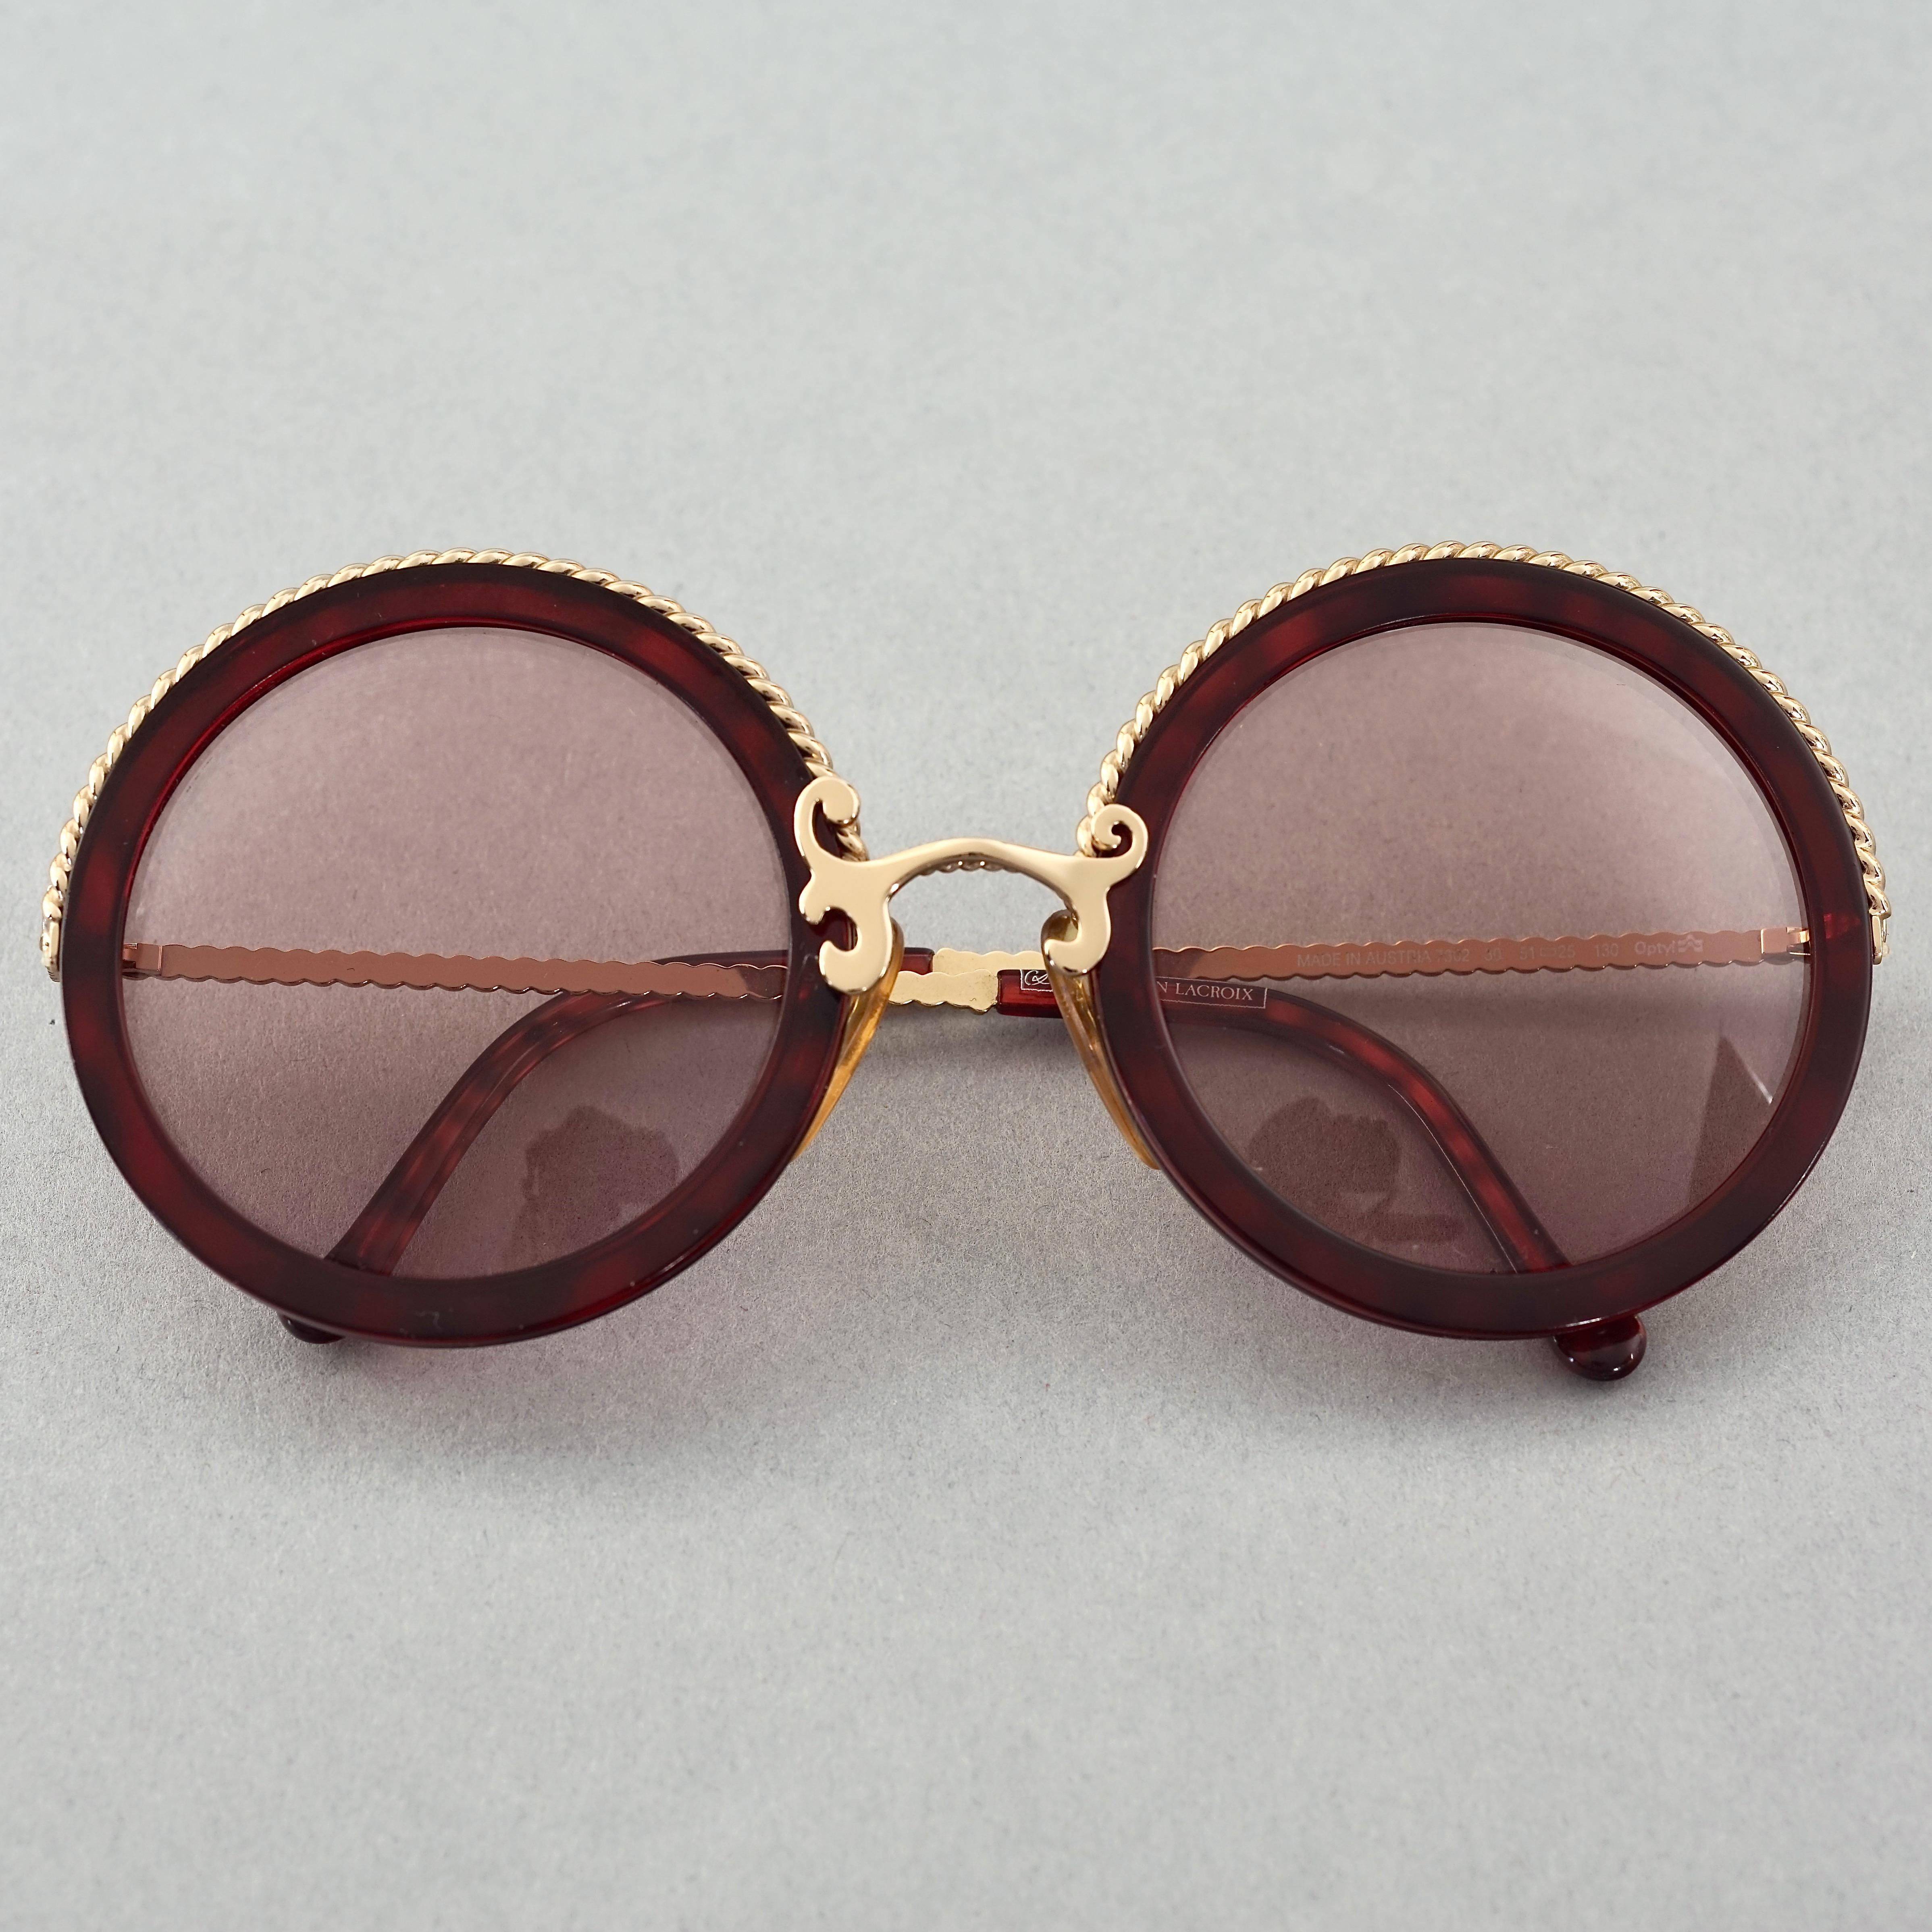 Women's Vintage CHRISTIAN LACROIX Tortoiseshell Round Sunglasses